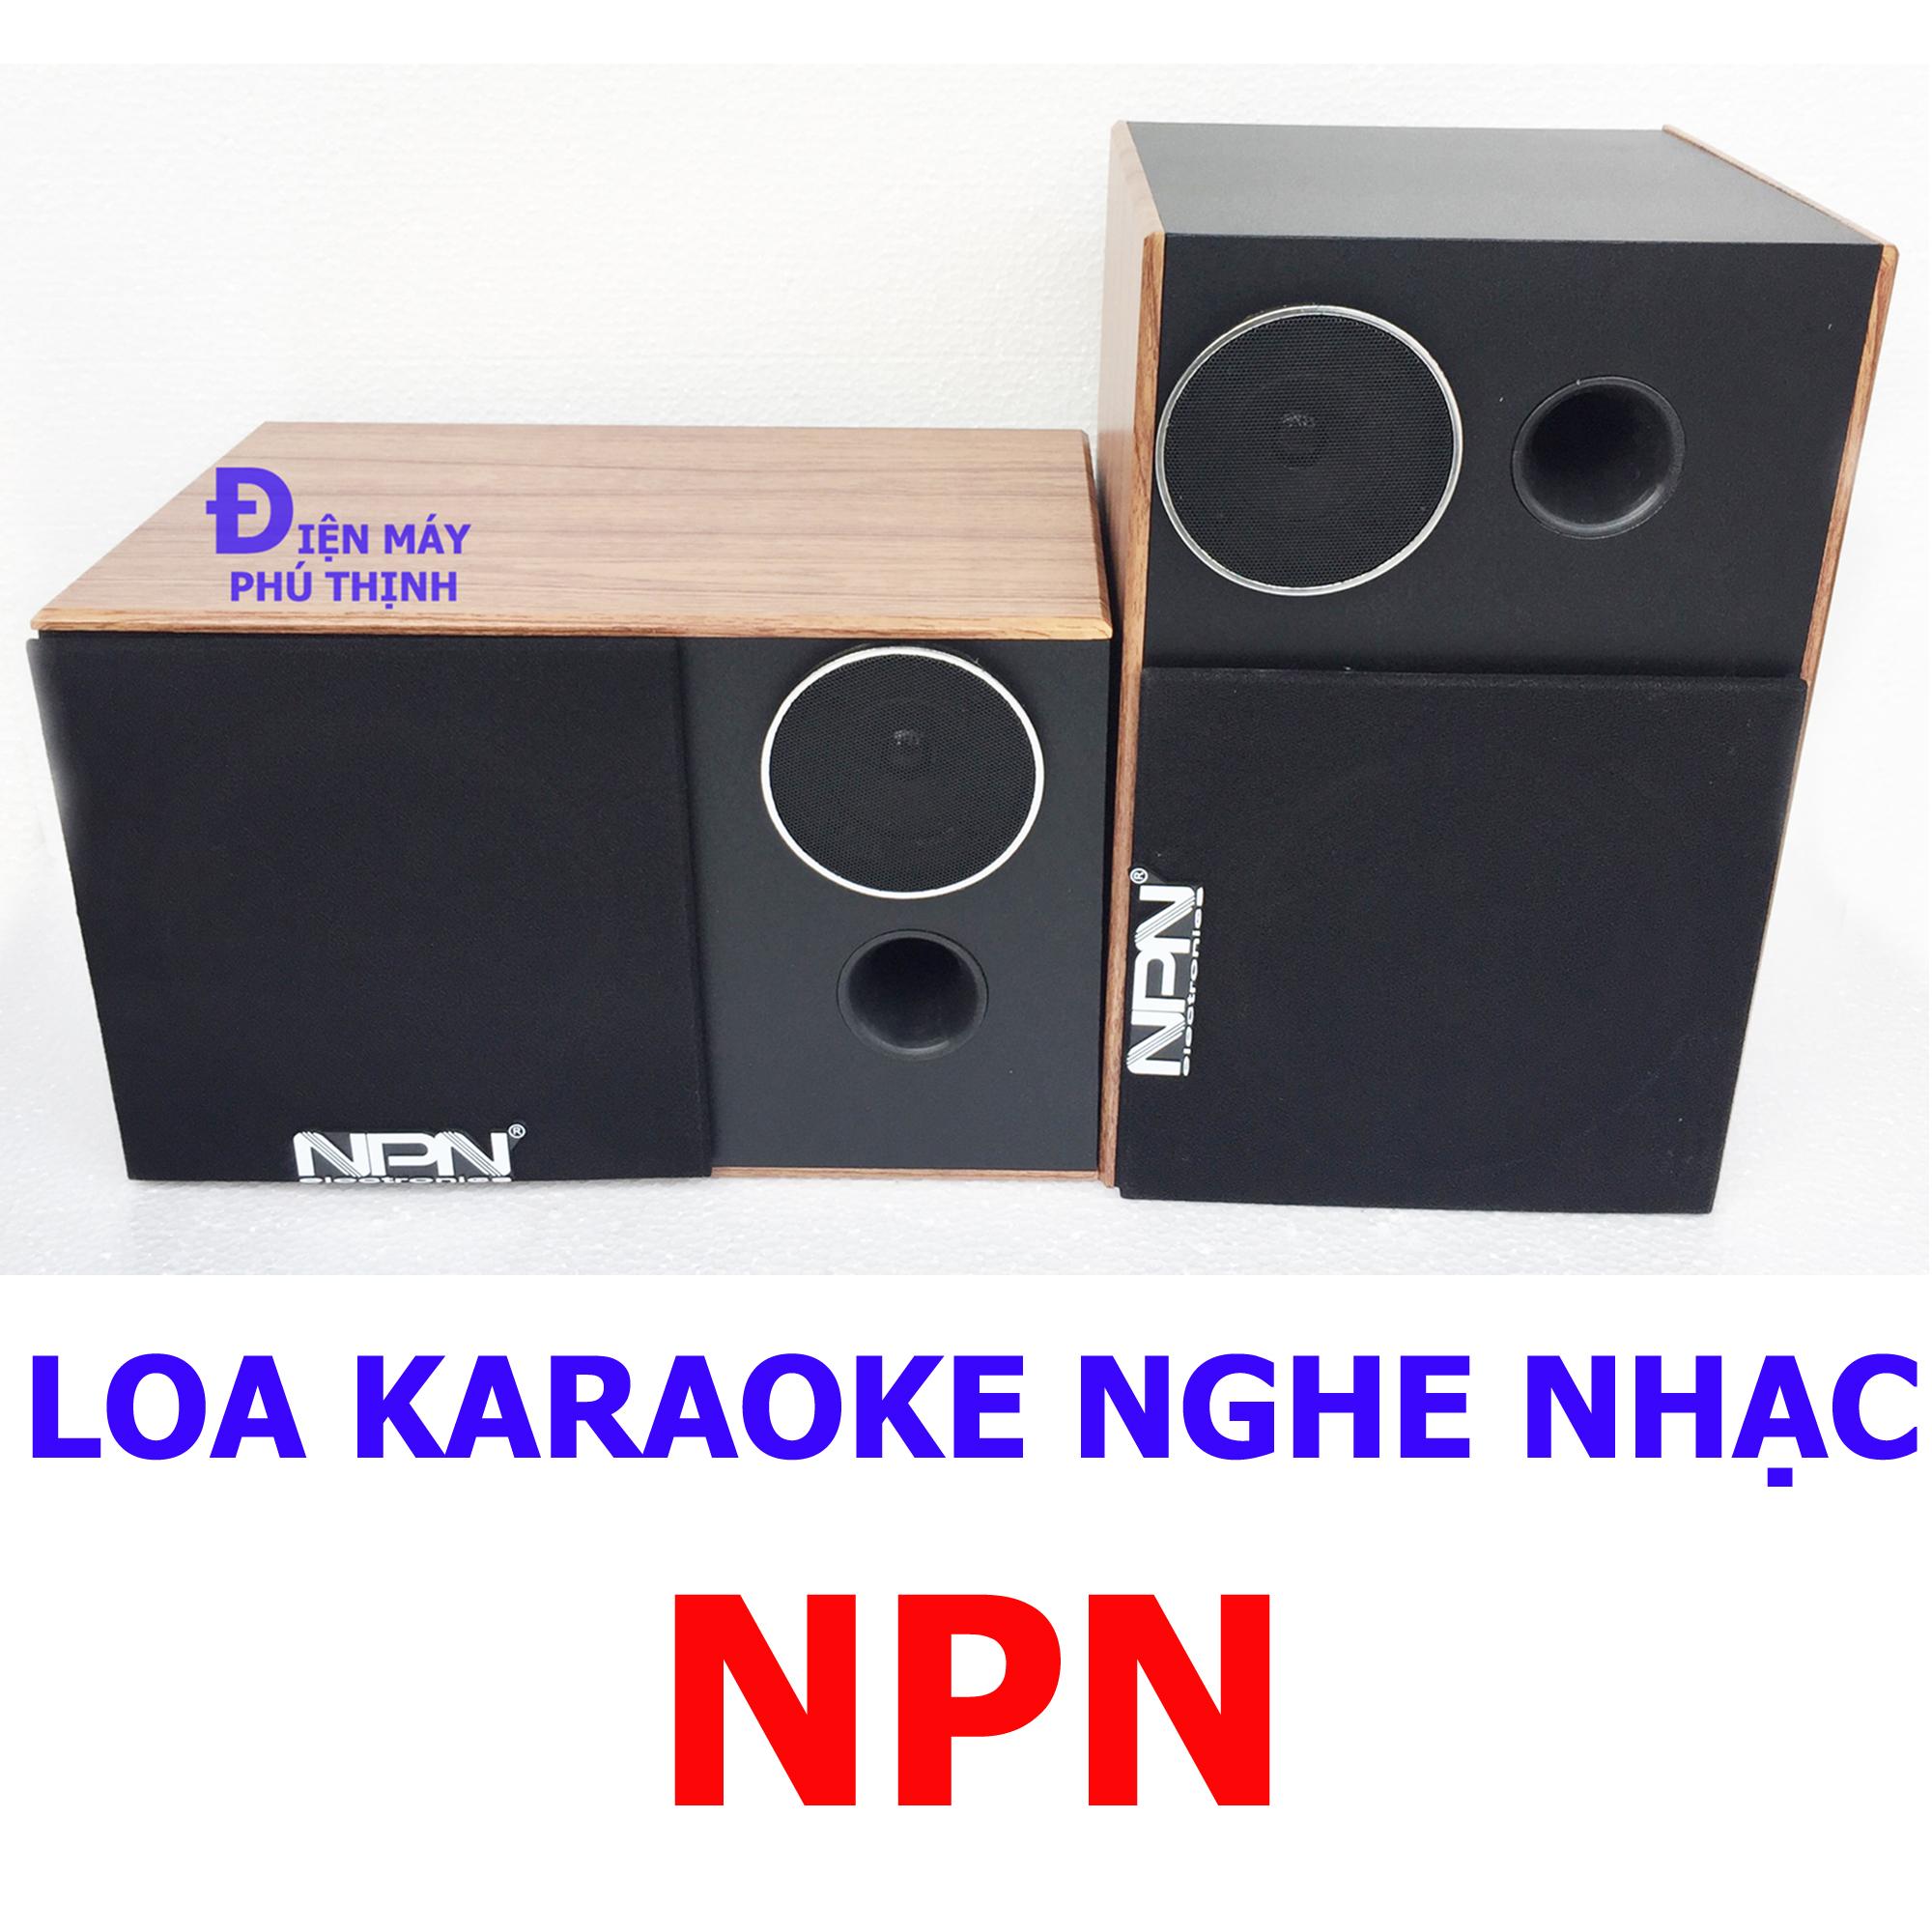 Loa karaoke LOA nghe nhạc gia đình NPN PT2TR hát karaoke hay giá rẻ +